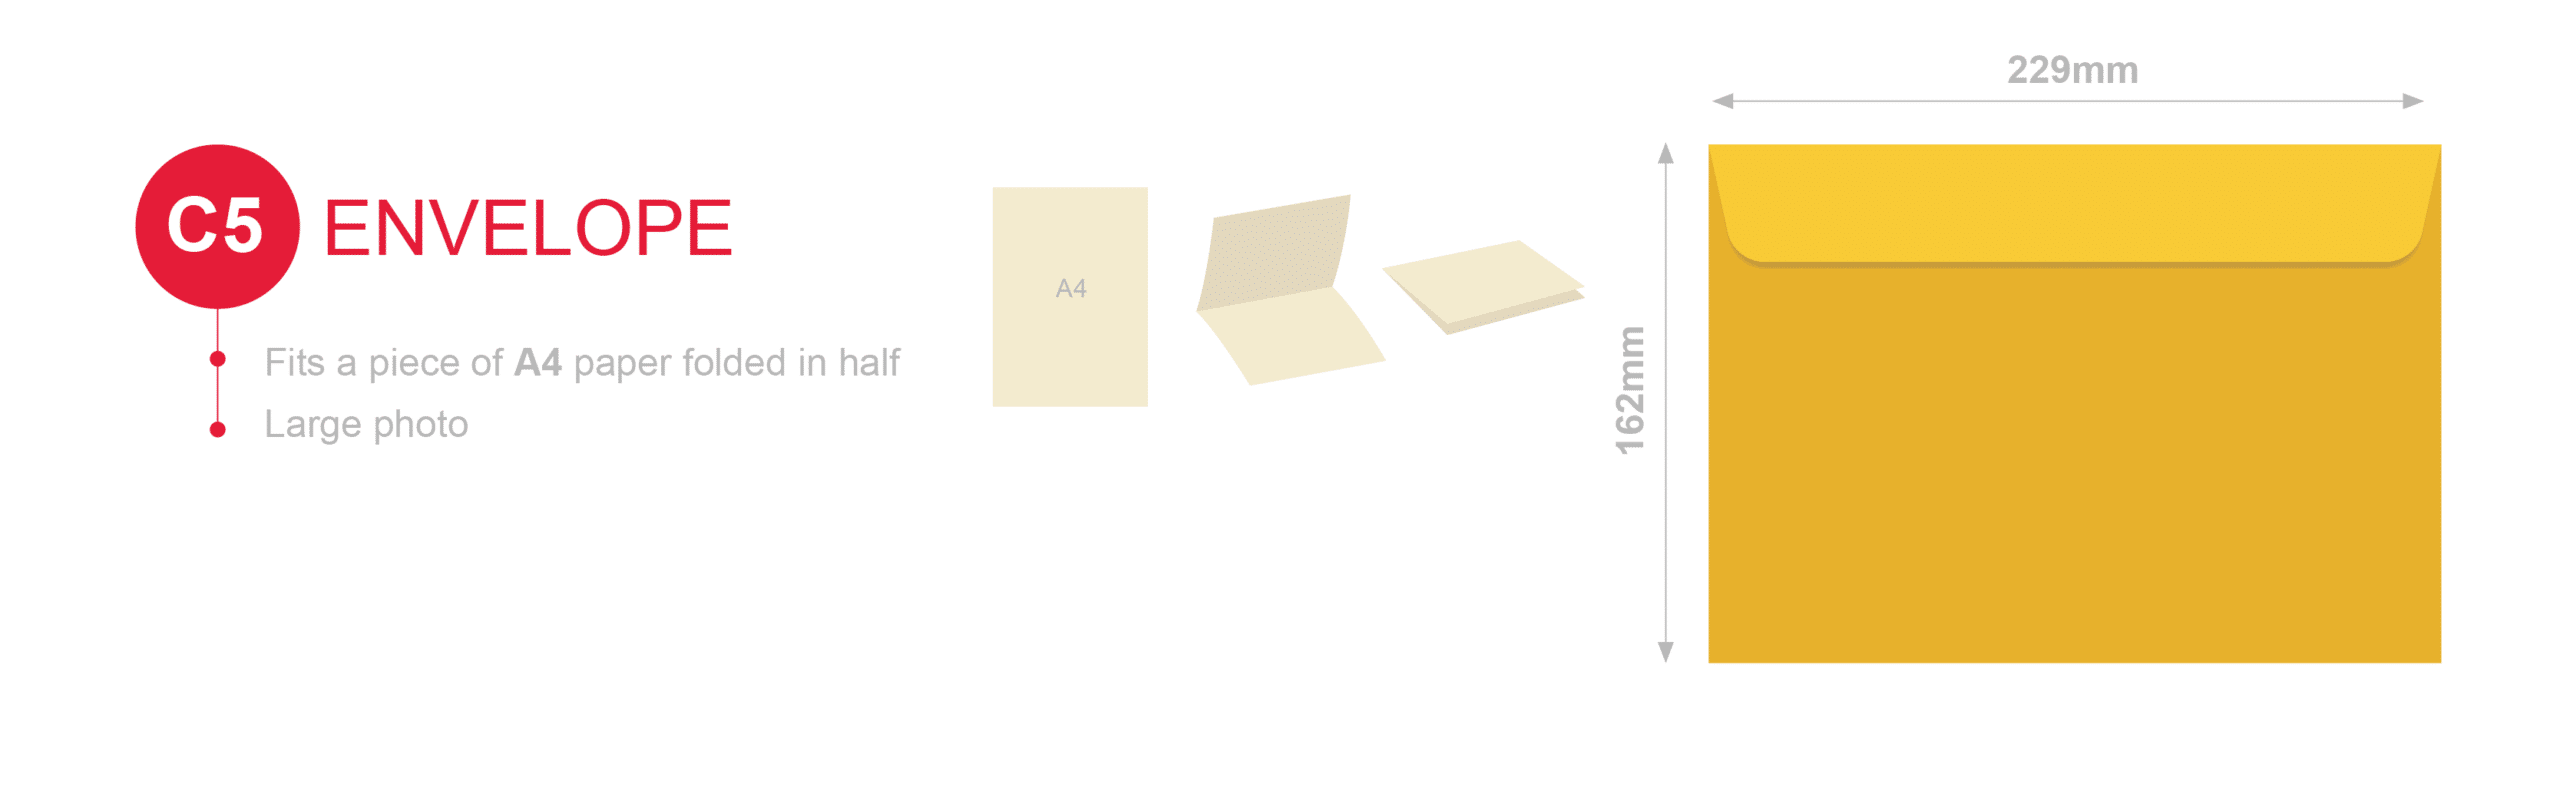 Envelope sizes